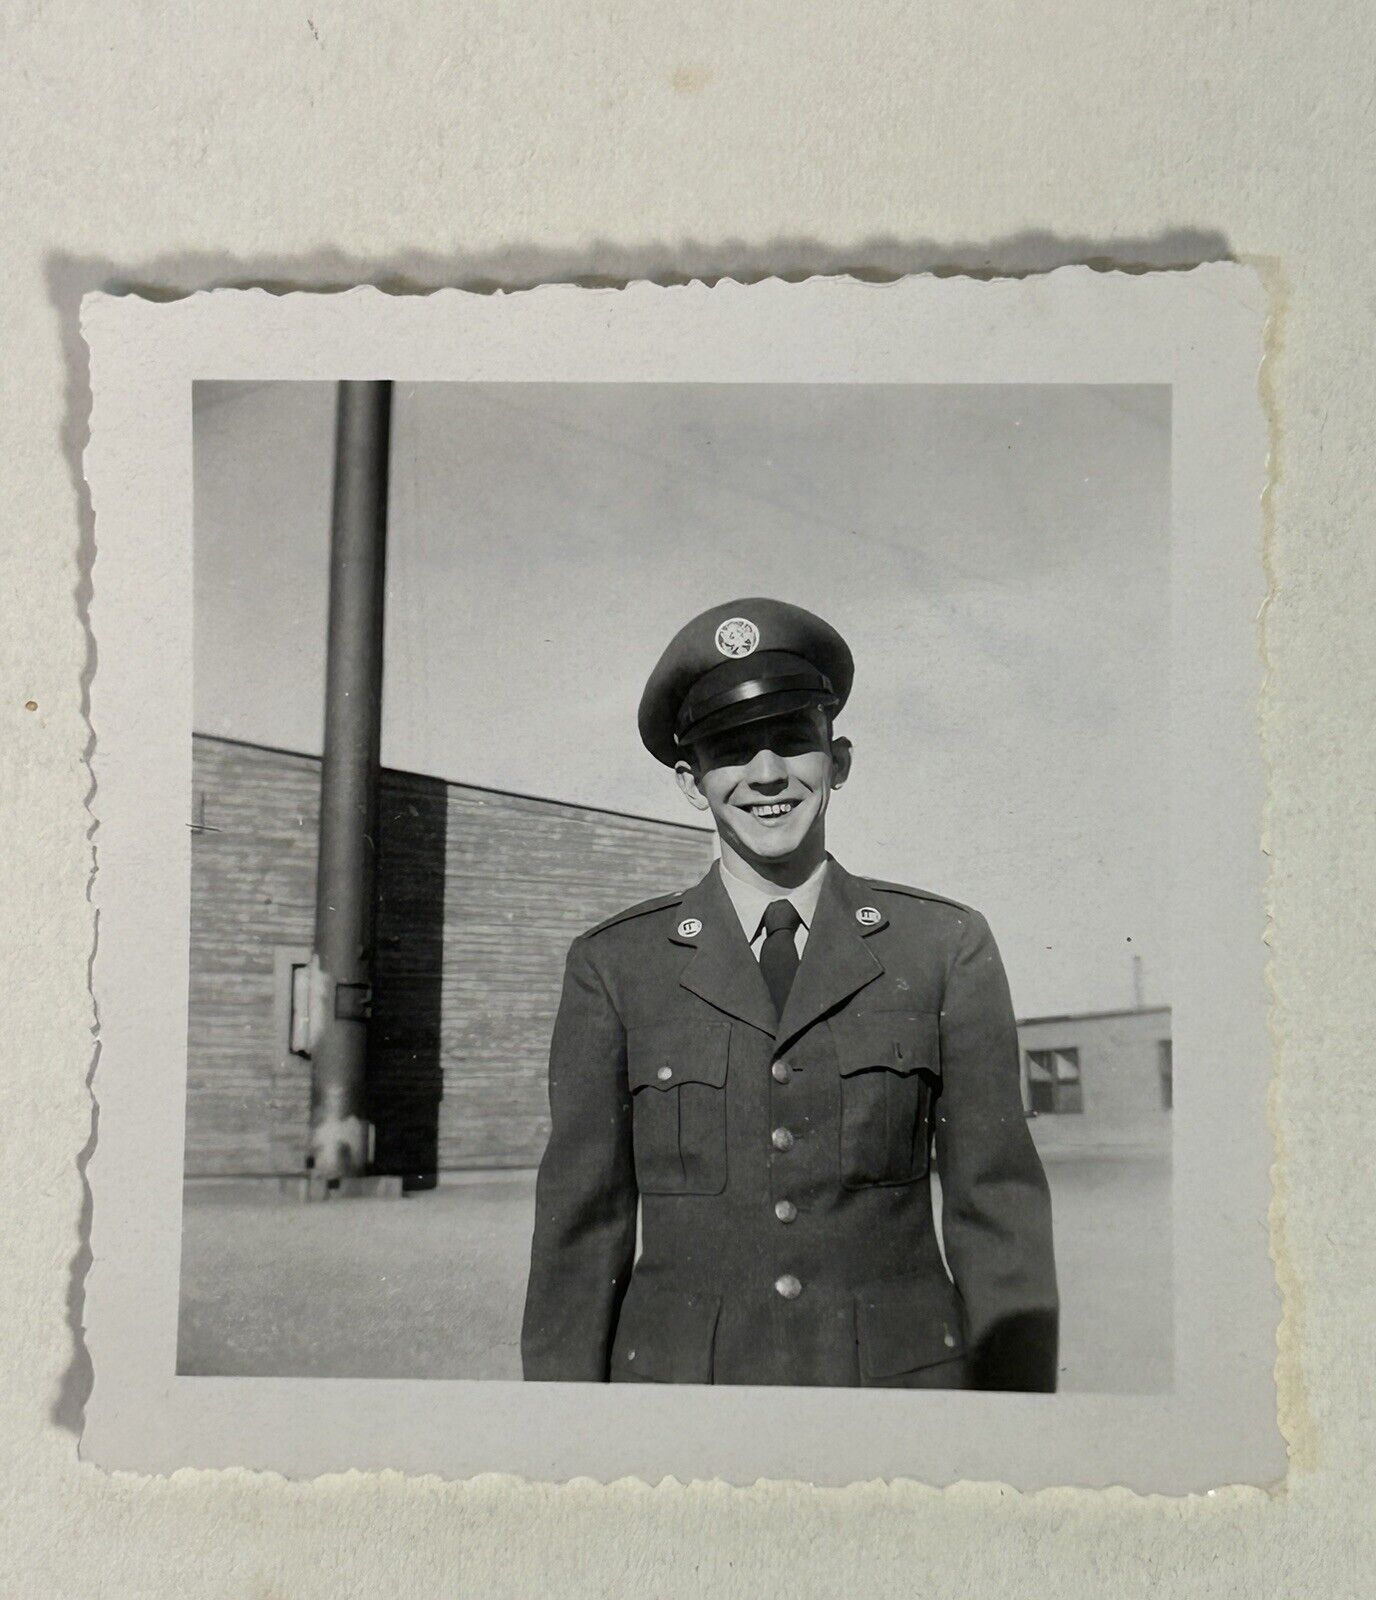 Vtg Black & White Photo Of Man In US Military Uniform Army Soldier WW2 Era